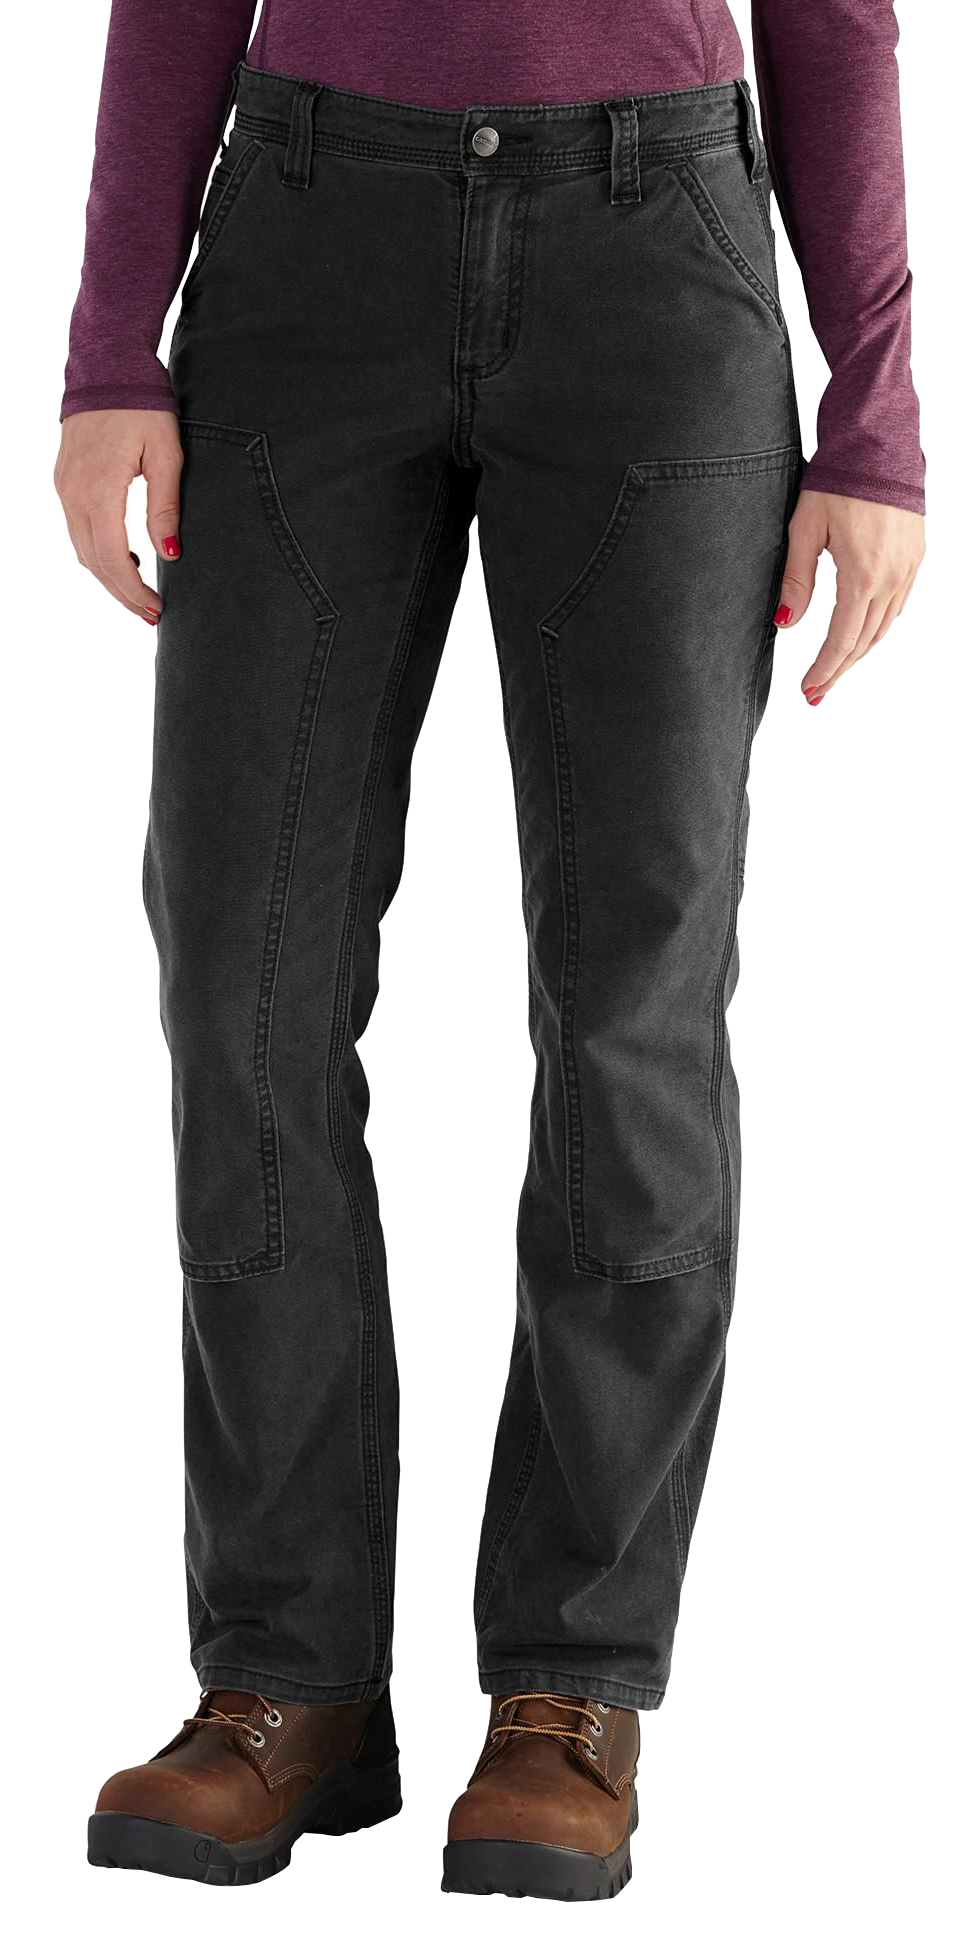 Carhartt Women's Slim Fit Crawford Double Front Pant - Choose SZ 10